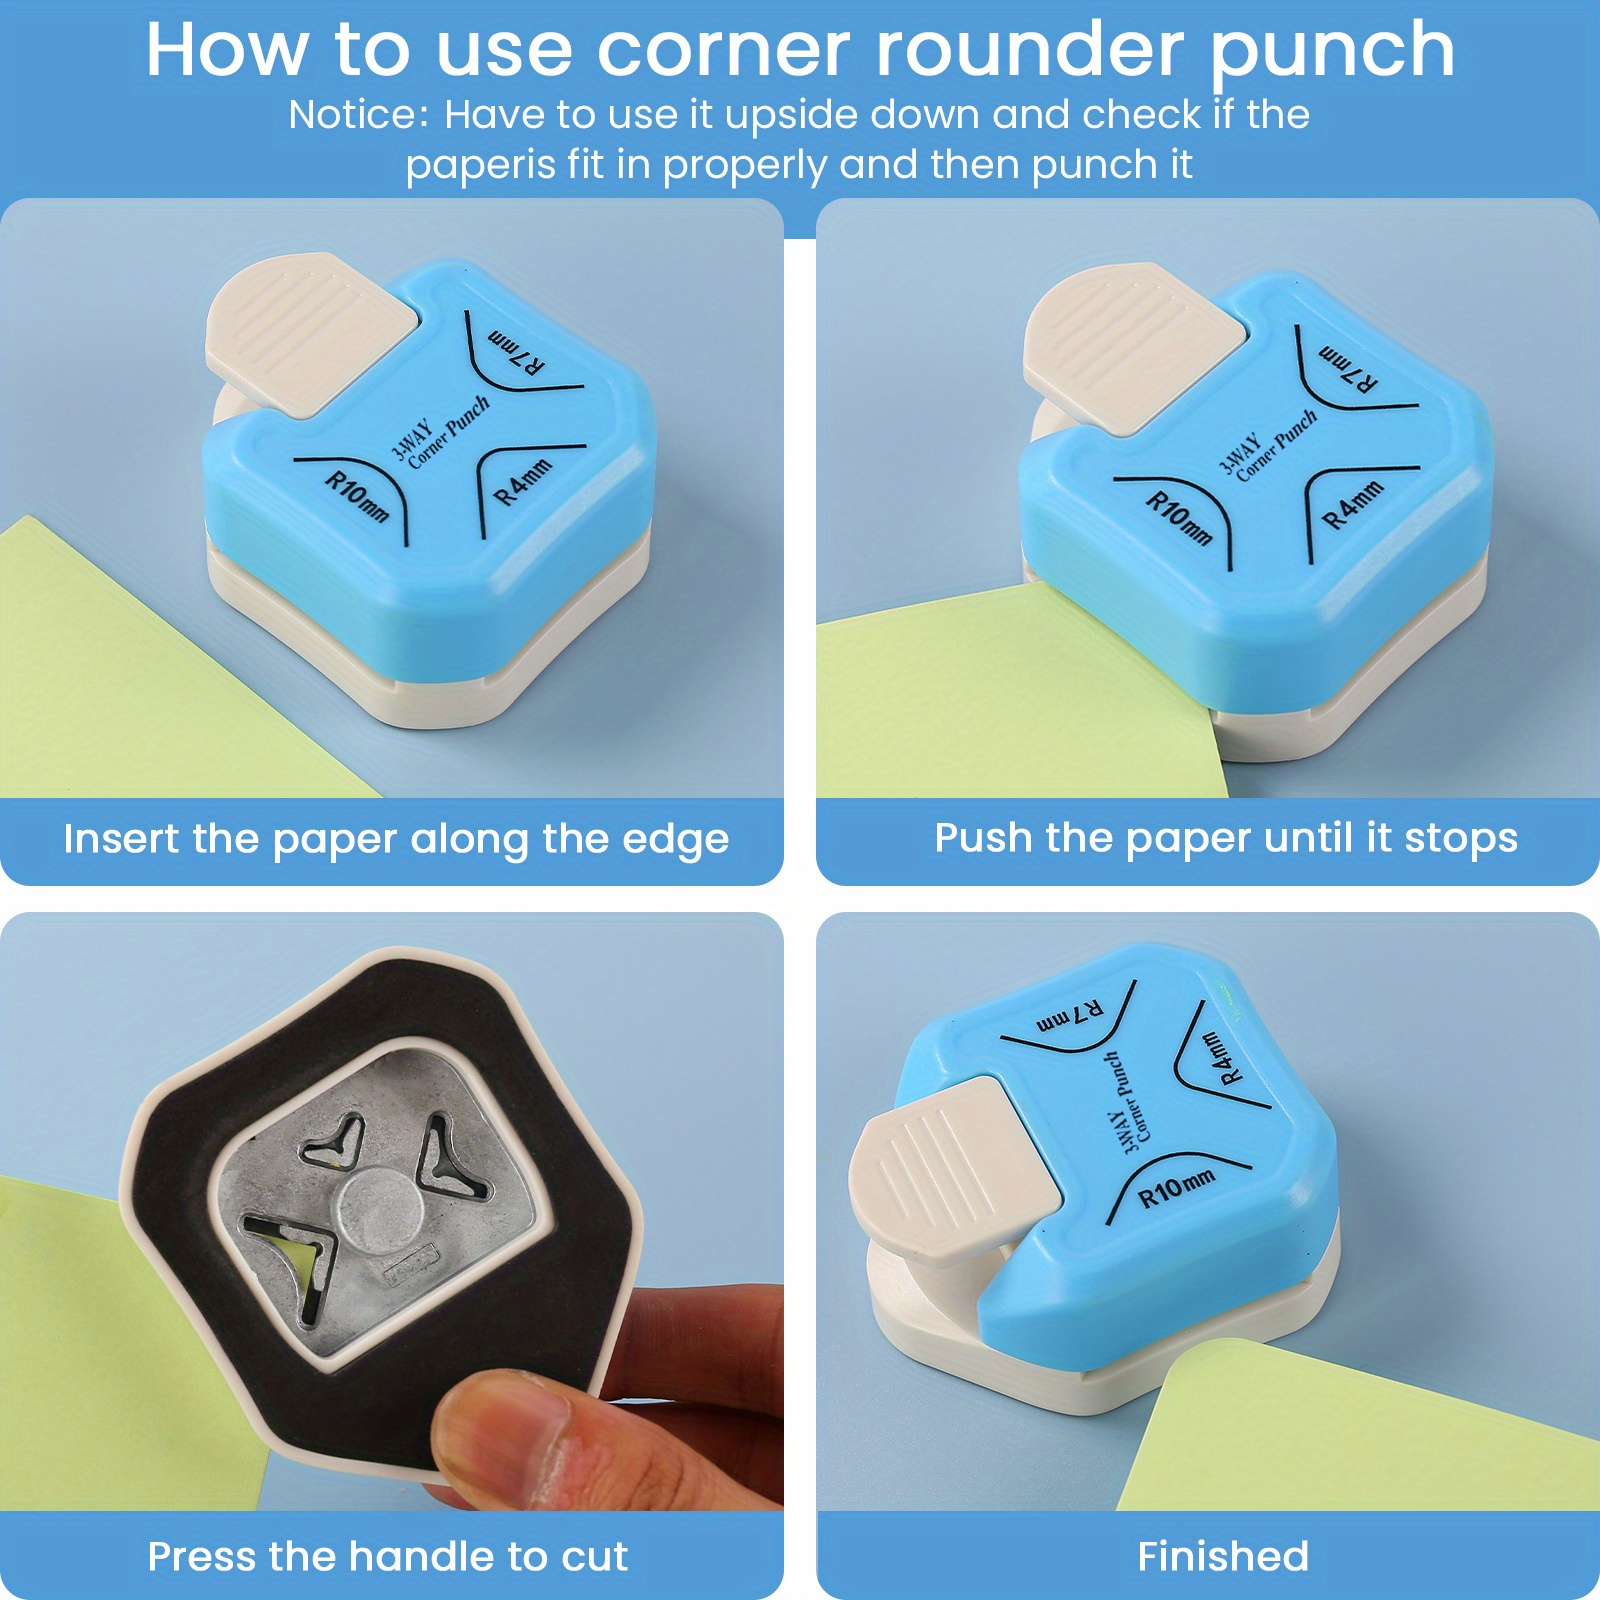 Willstar R4 Corner Punch for Photo, Card, Paper; 4mm Corner Cutter